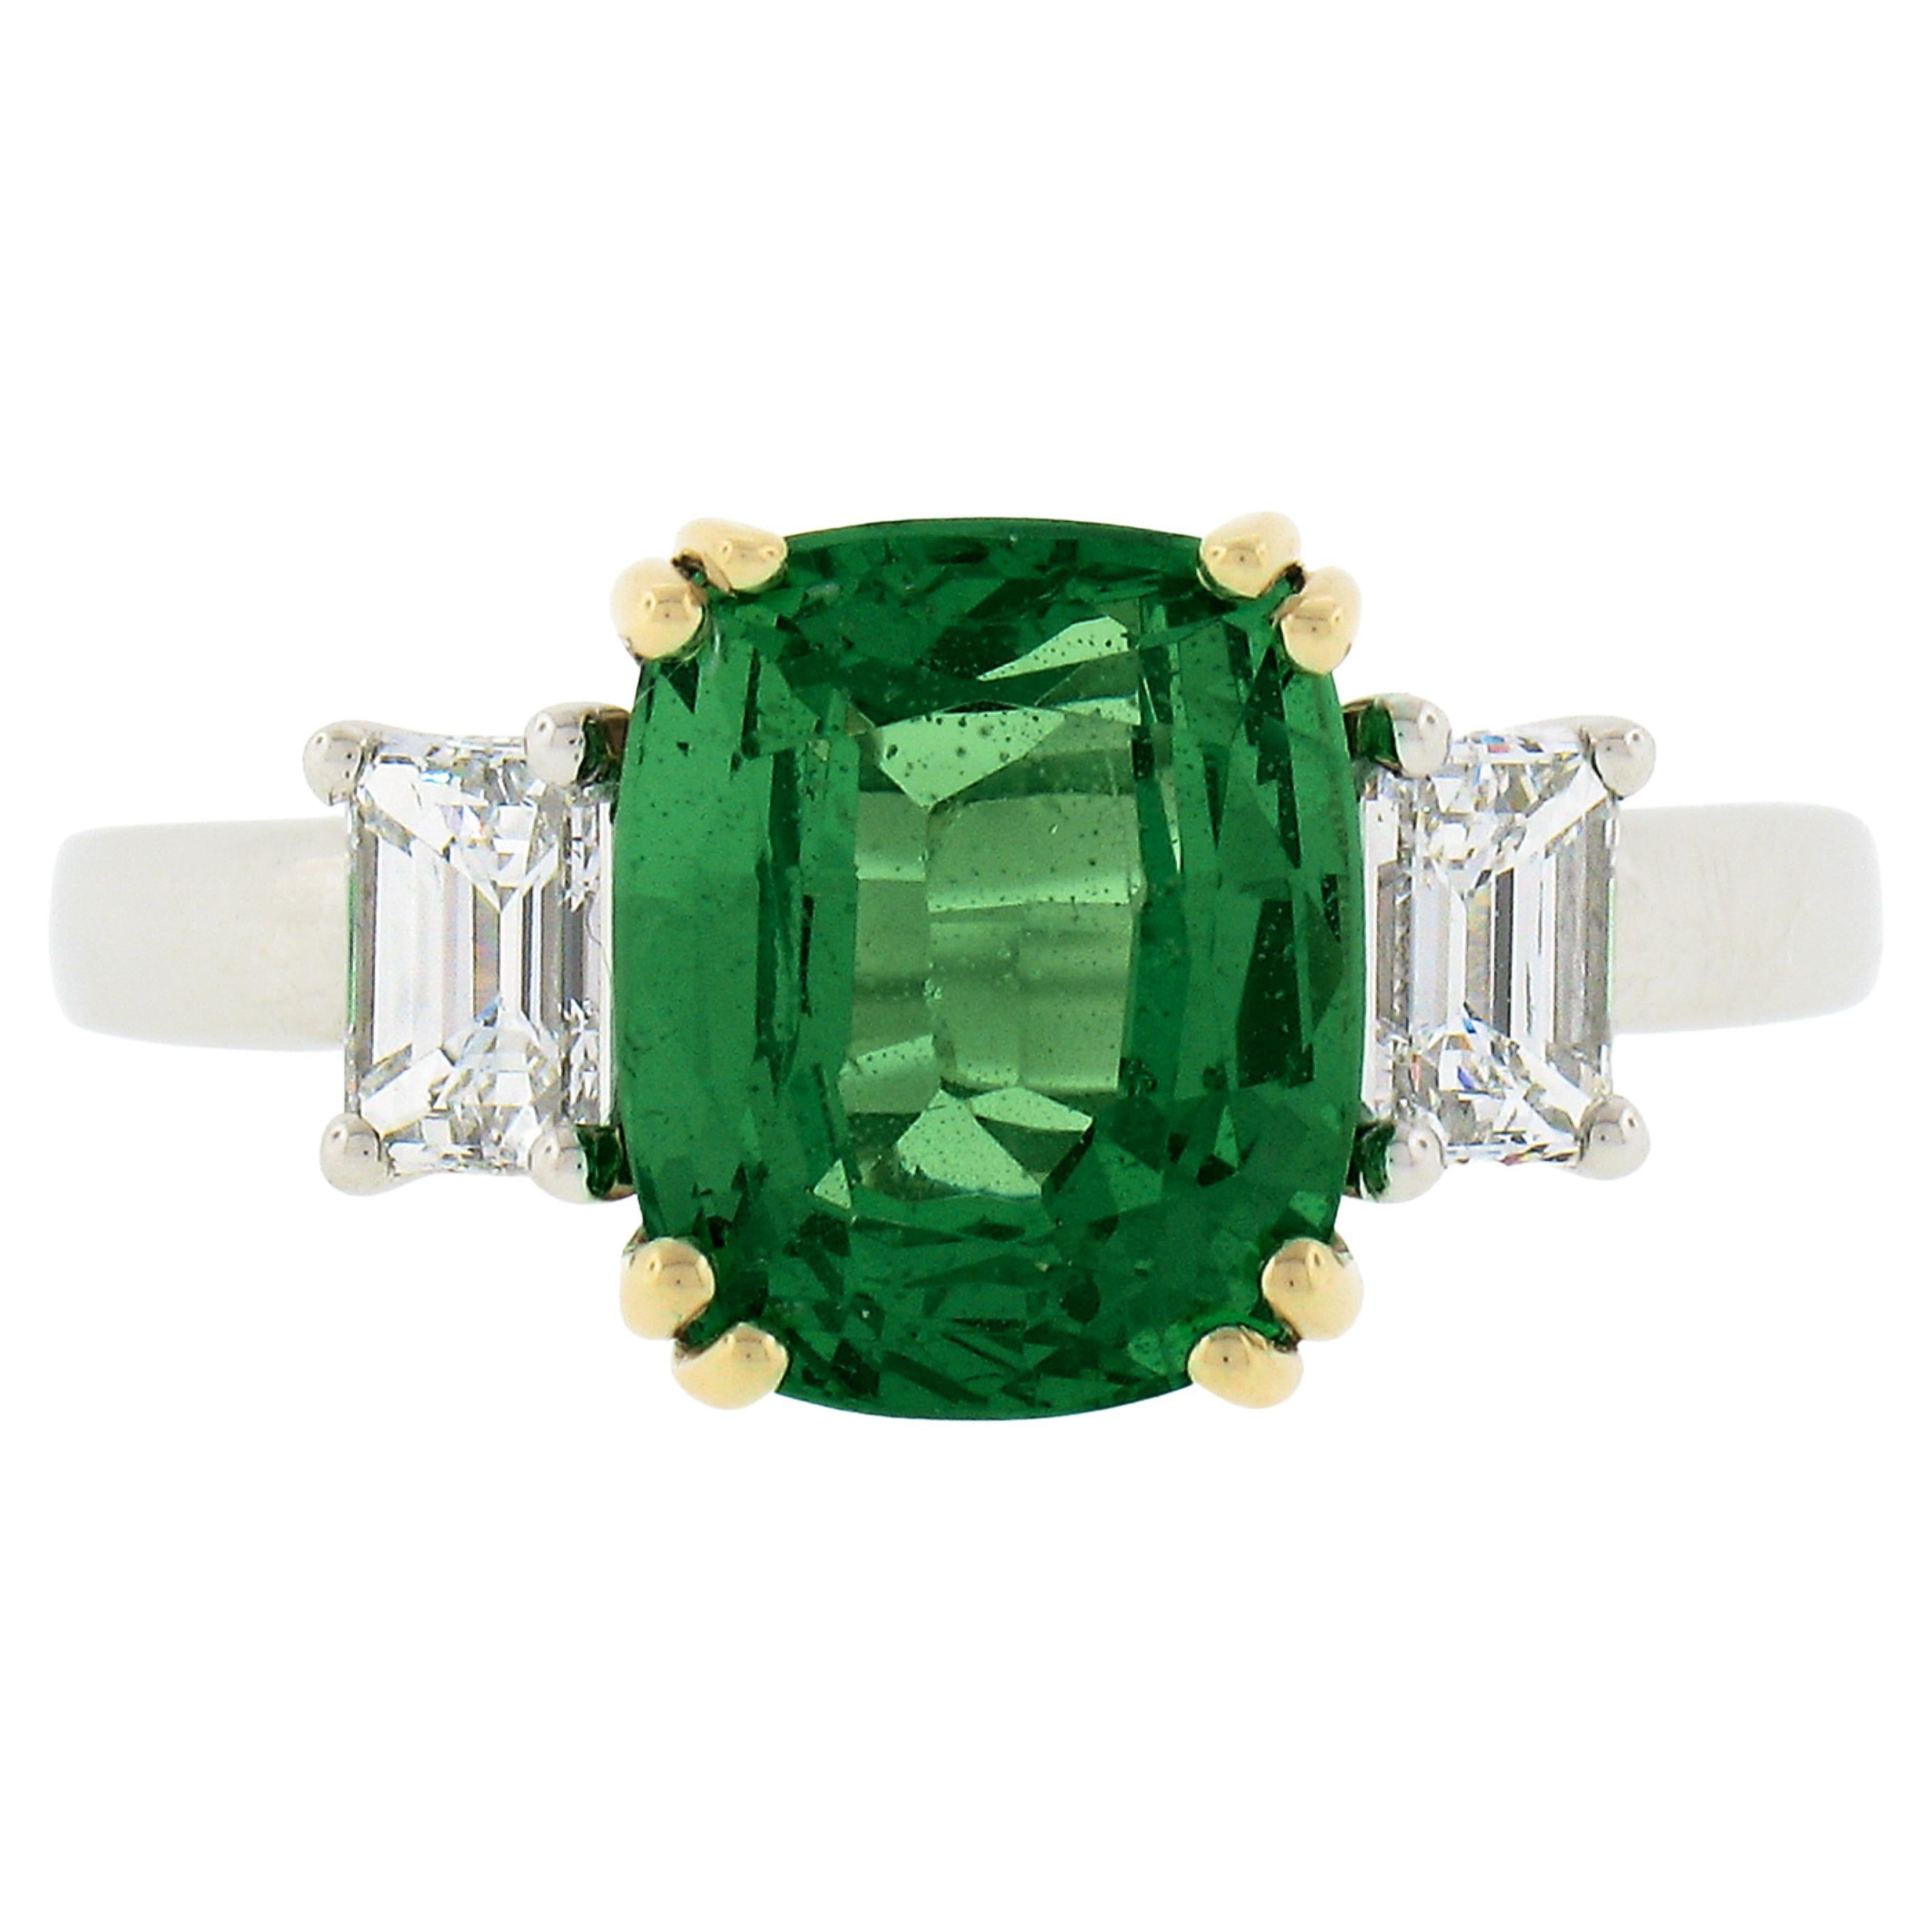 NEU Platin & 14k Gold 4,39ctw GIA Kissen Tsavorit & Smaragd Schliff Diamant Ring